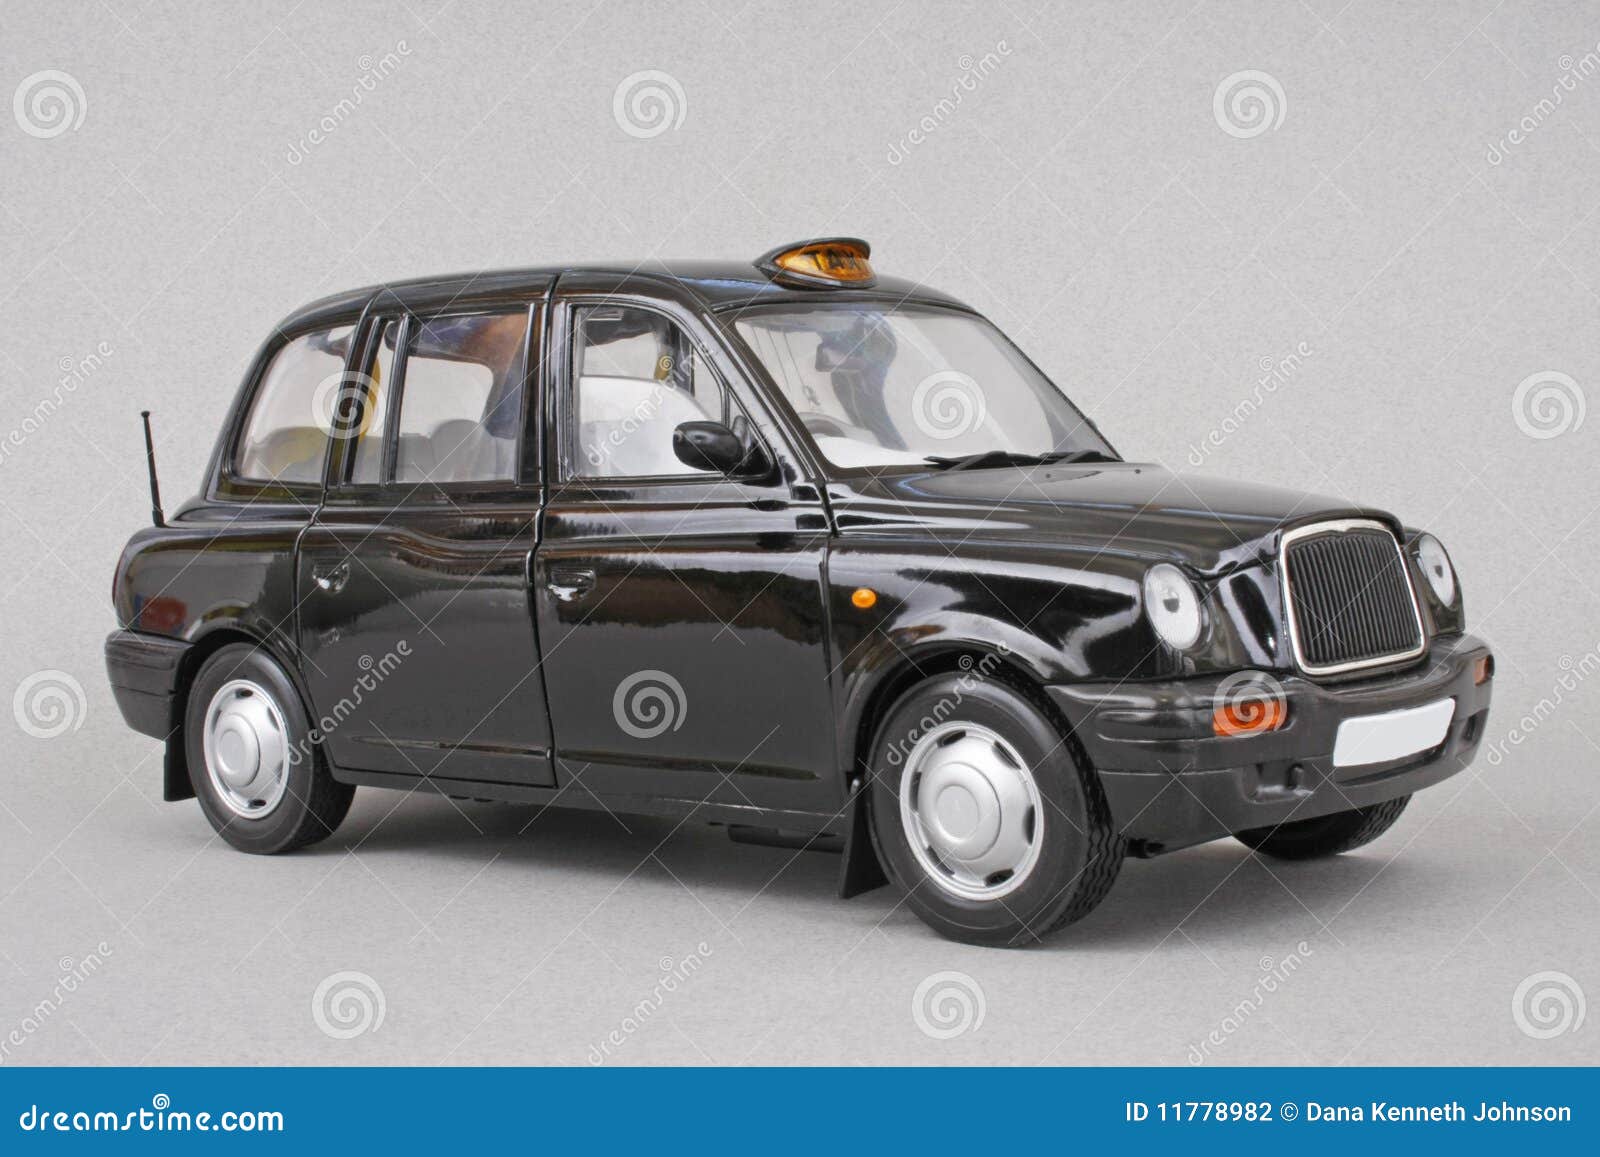 lti london taxi cab 1998